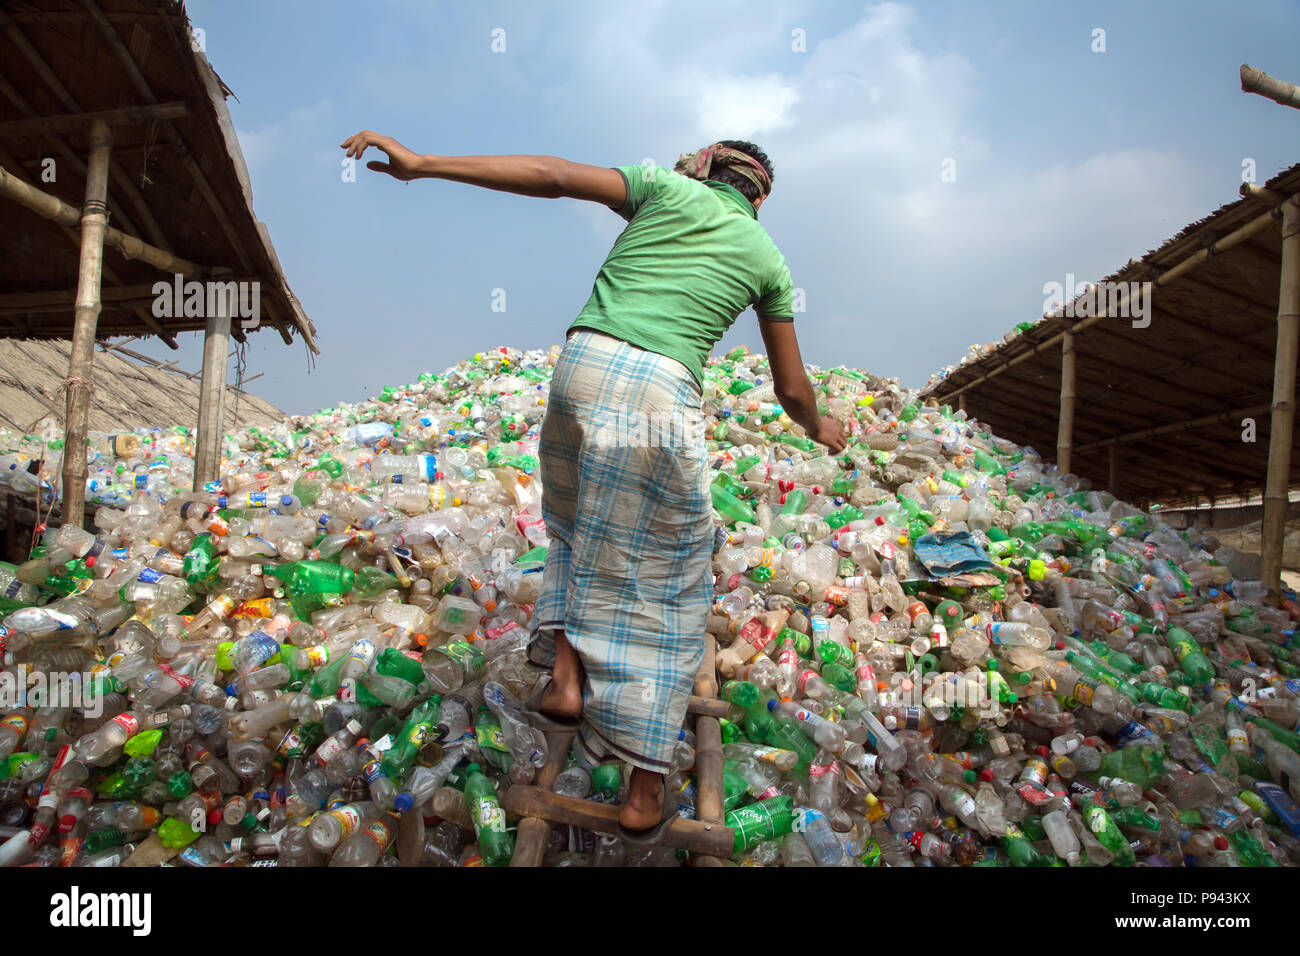 Warehouse recycling plastic in Hazaribagh, Dhaka, Bangladesh Stock Photo